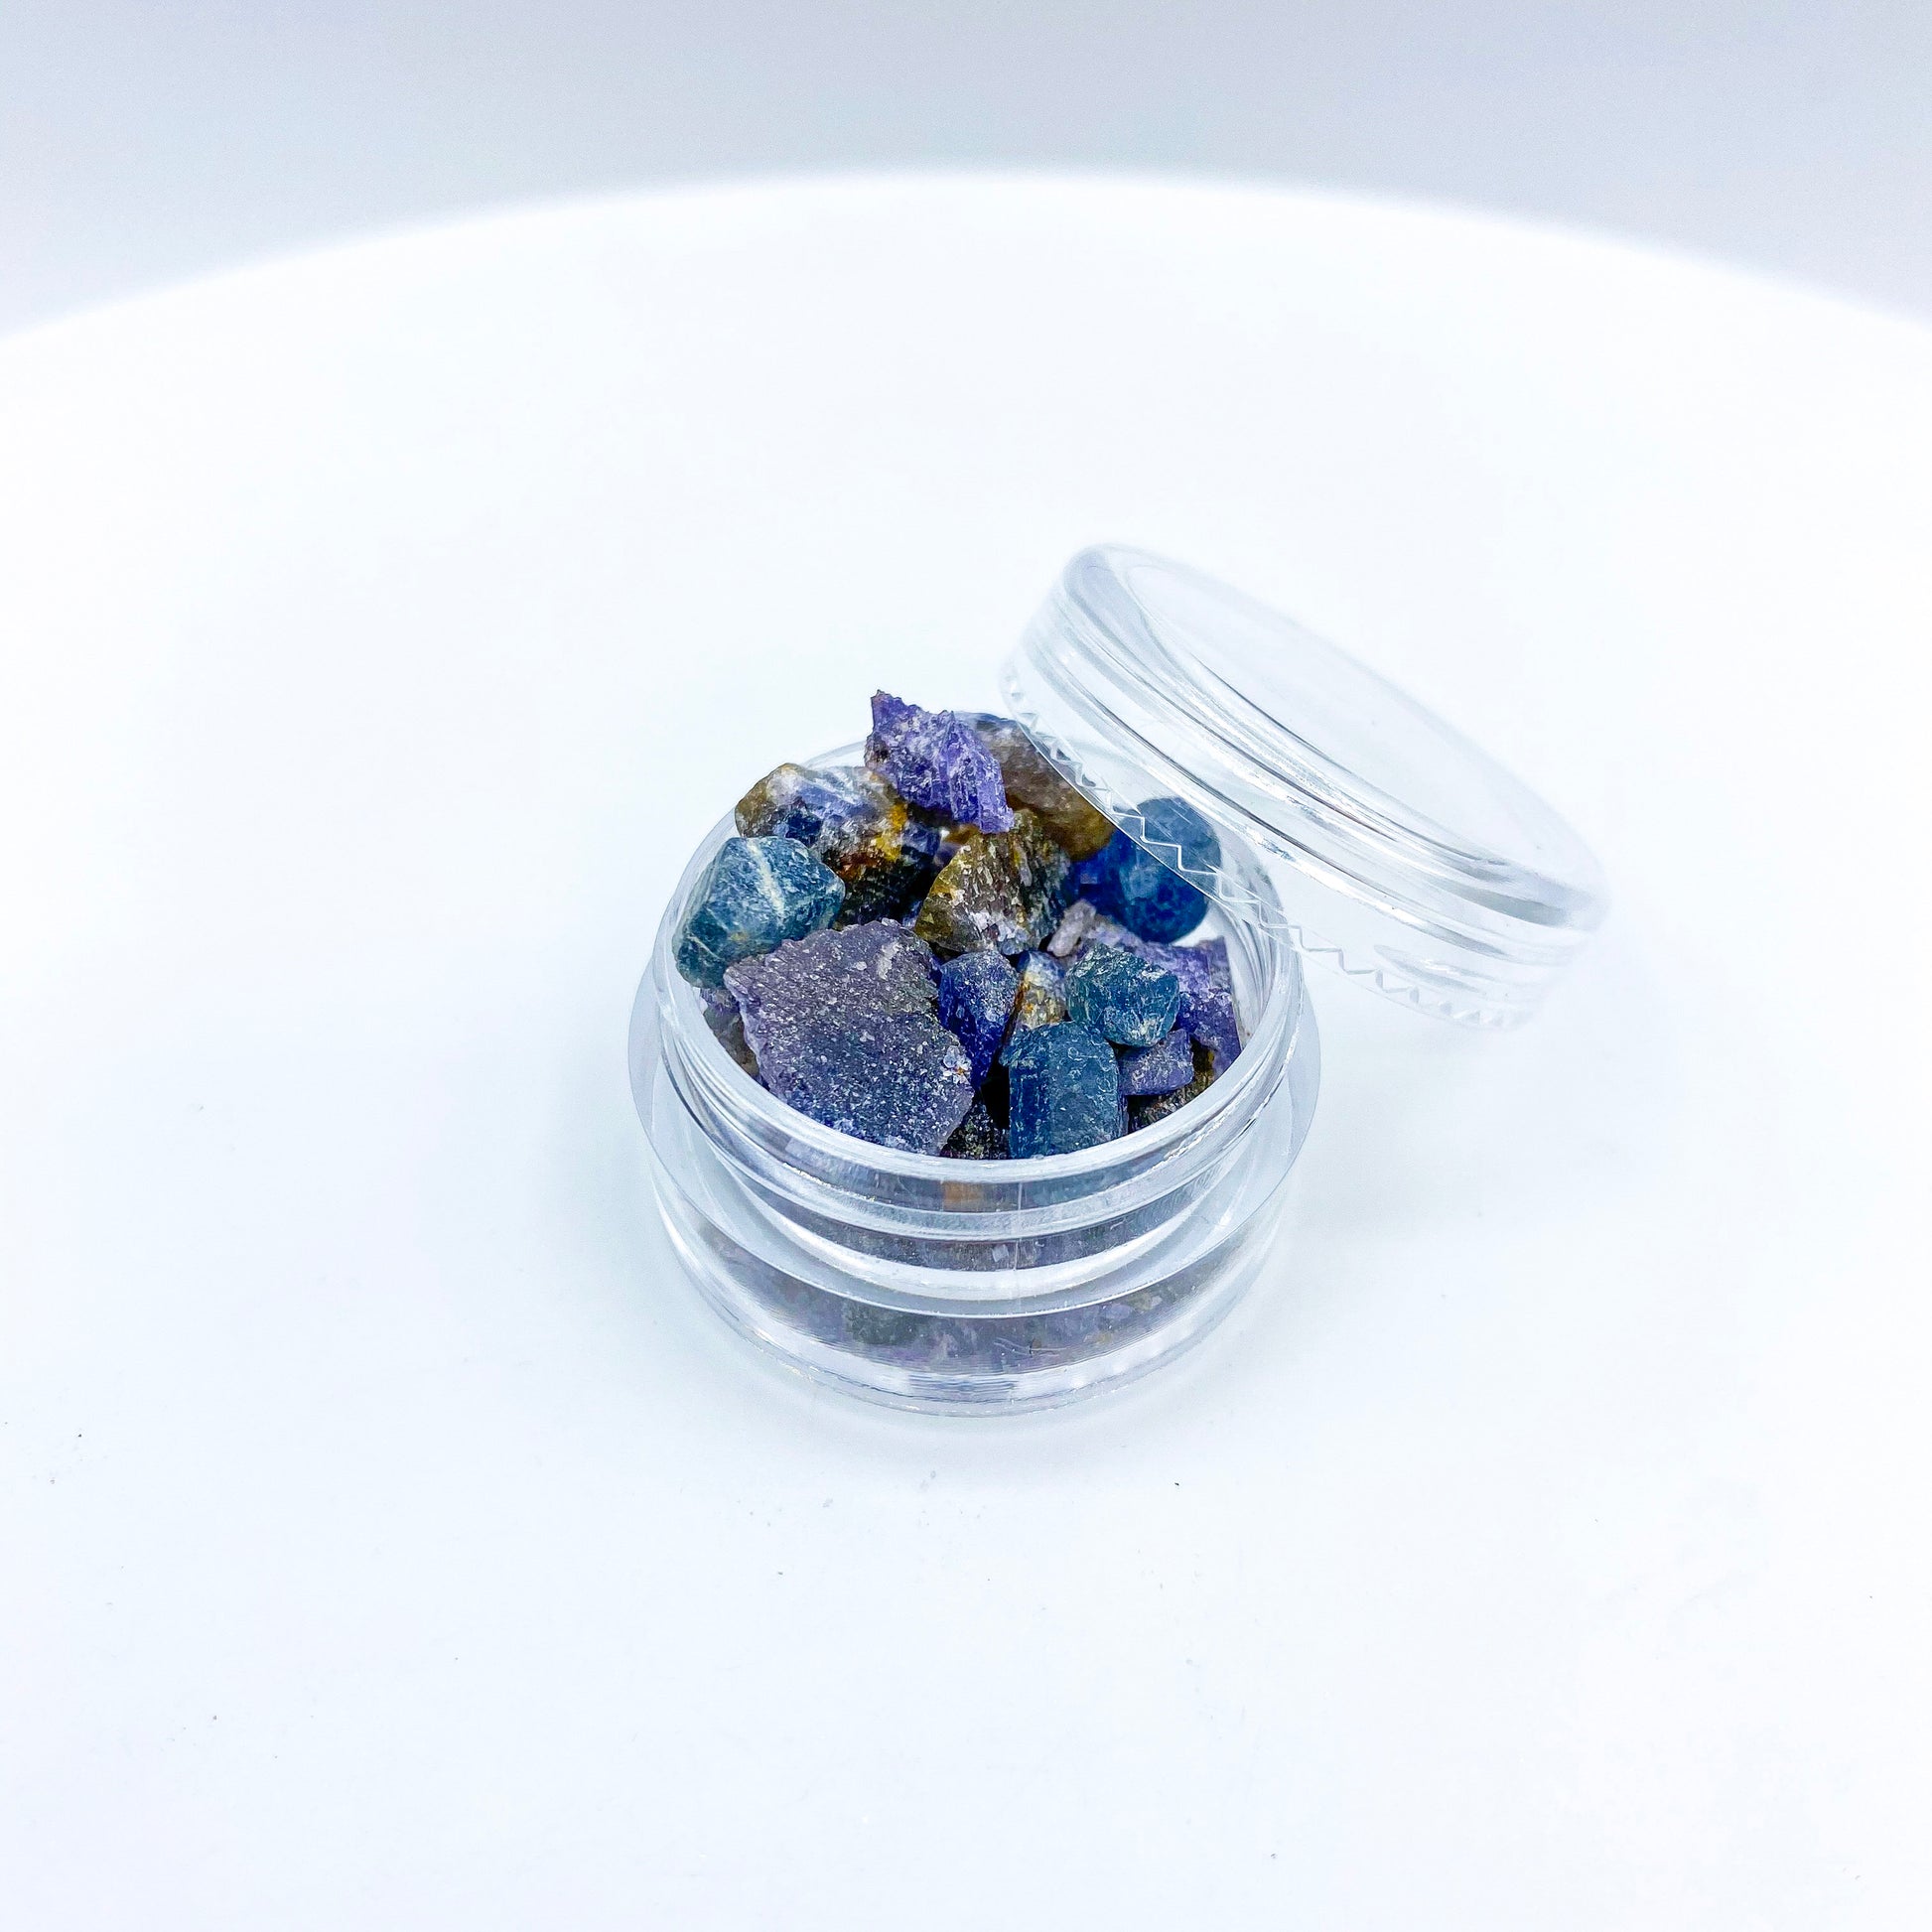 Sapphire - Patrick Adair Supplies